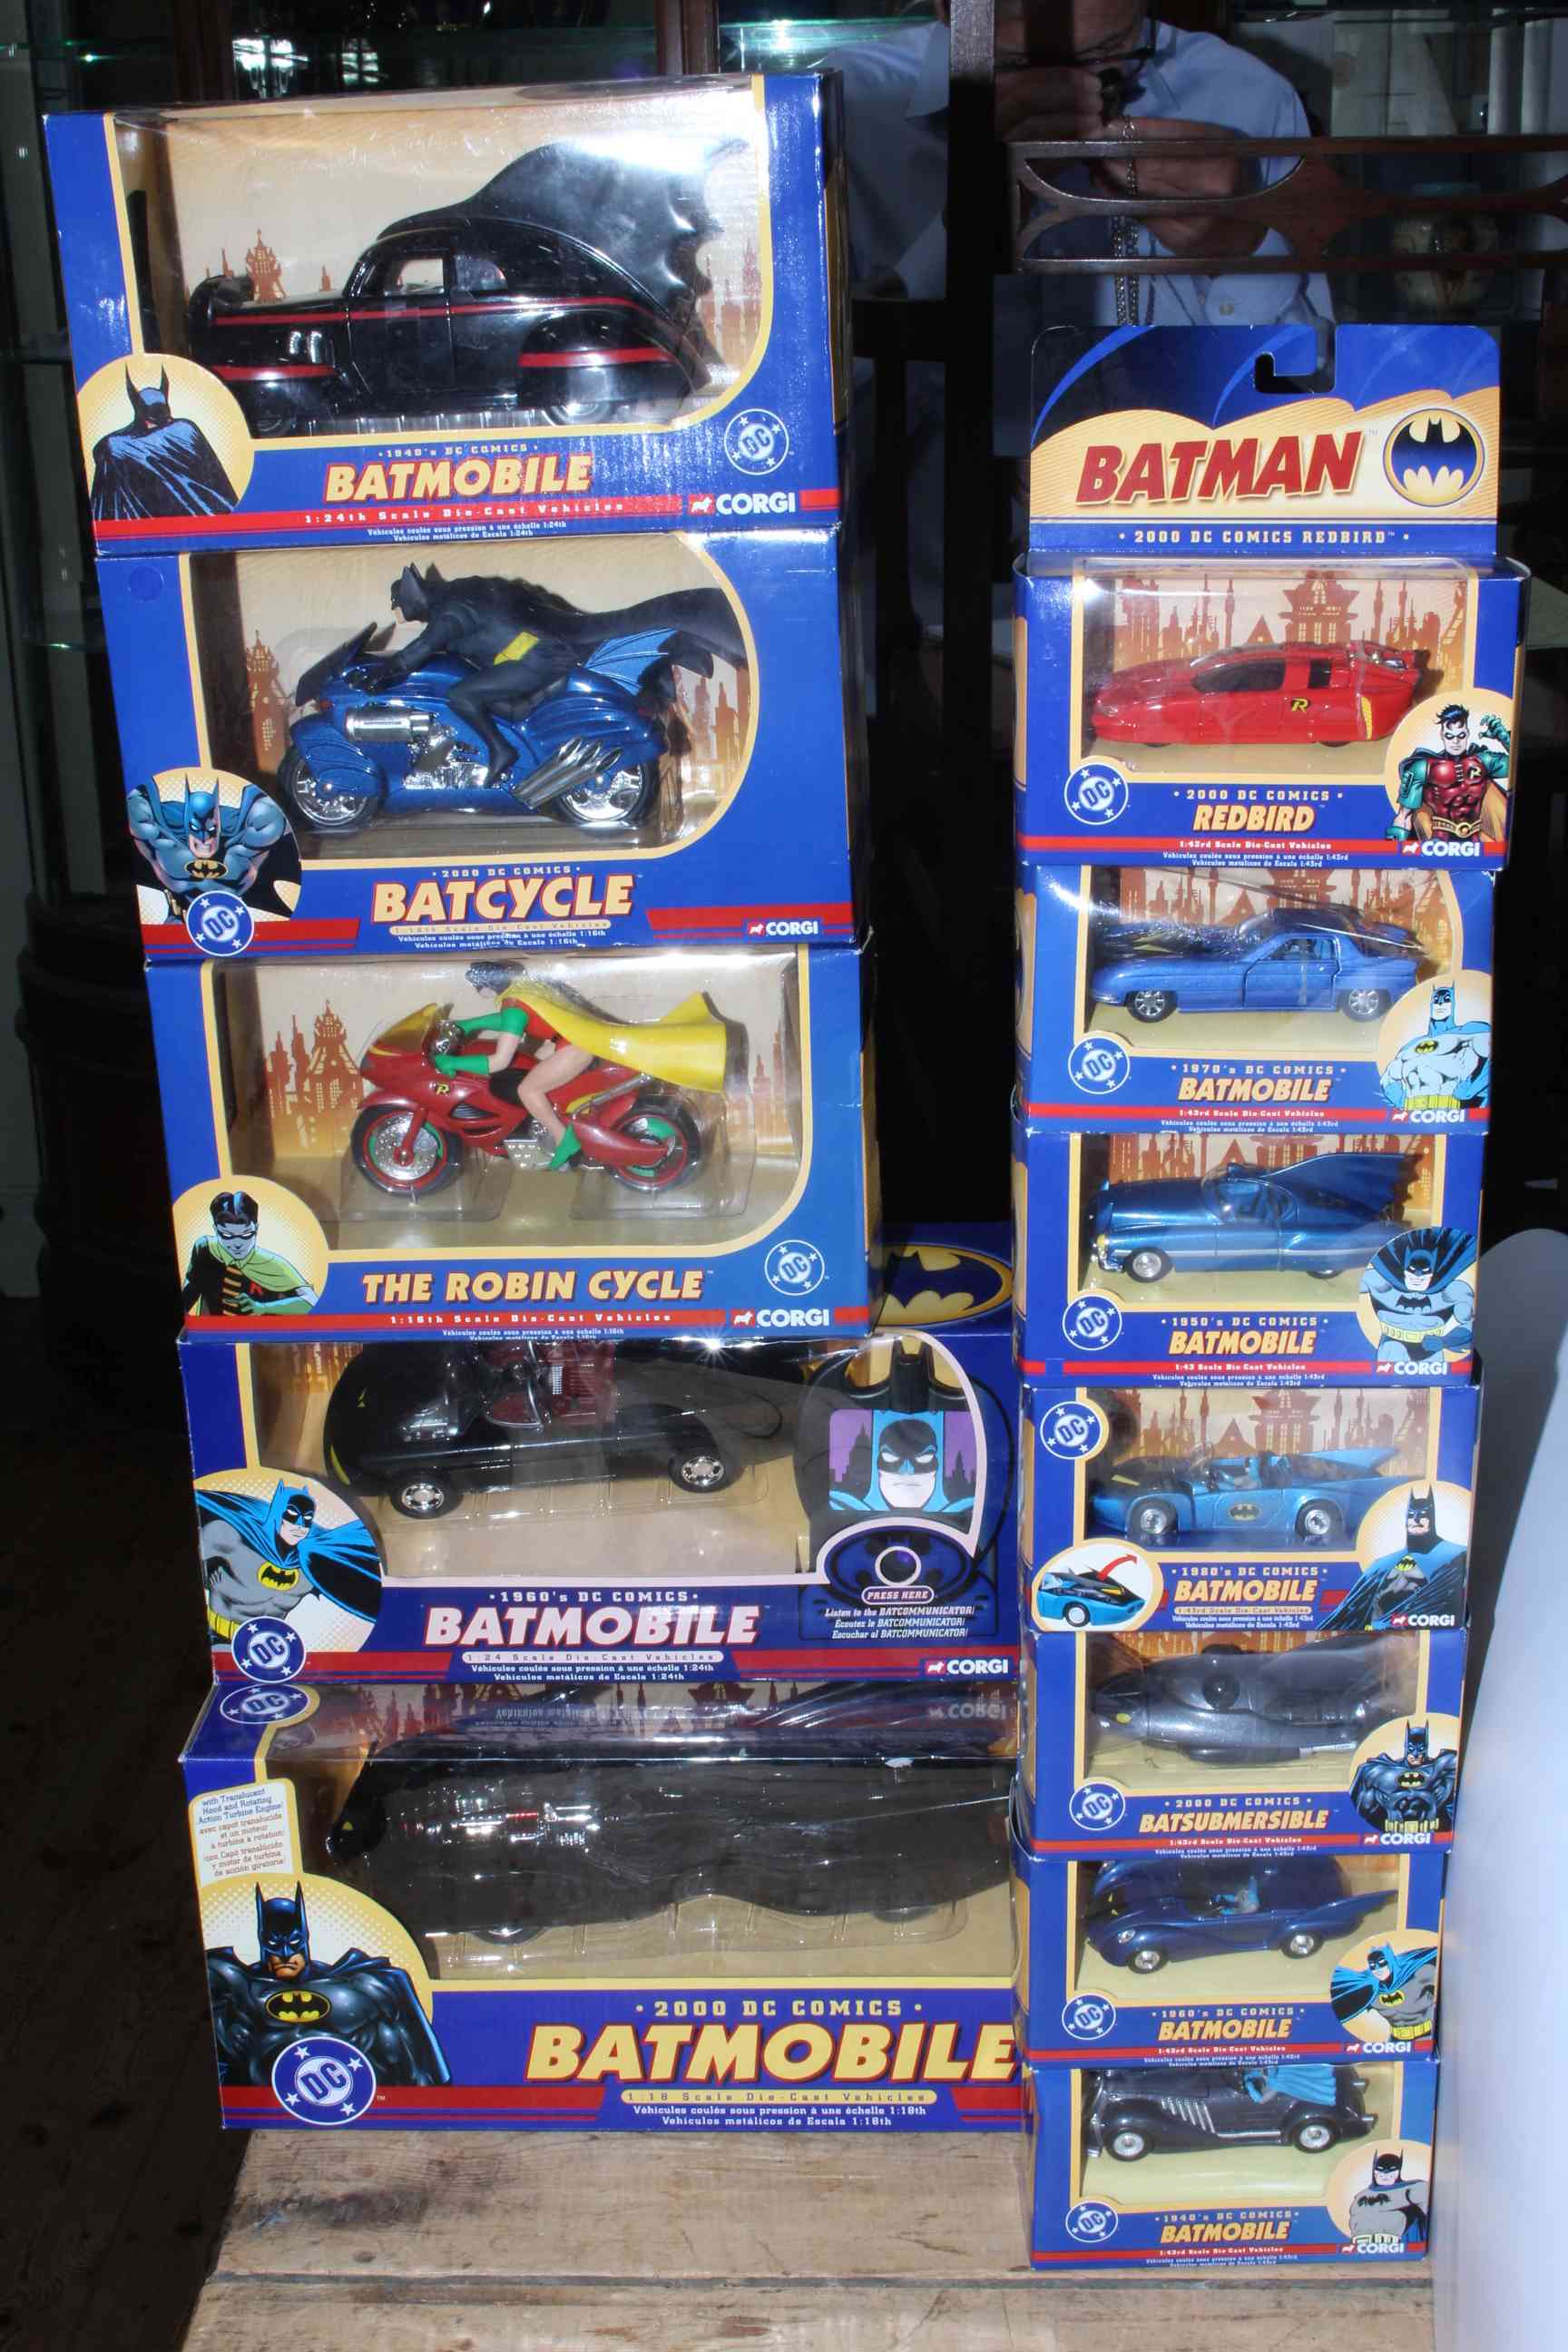 Collection of Corgi Batman model vehicles including large Batmobile, Robin cycle, Batcycle,